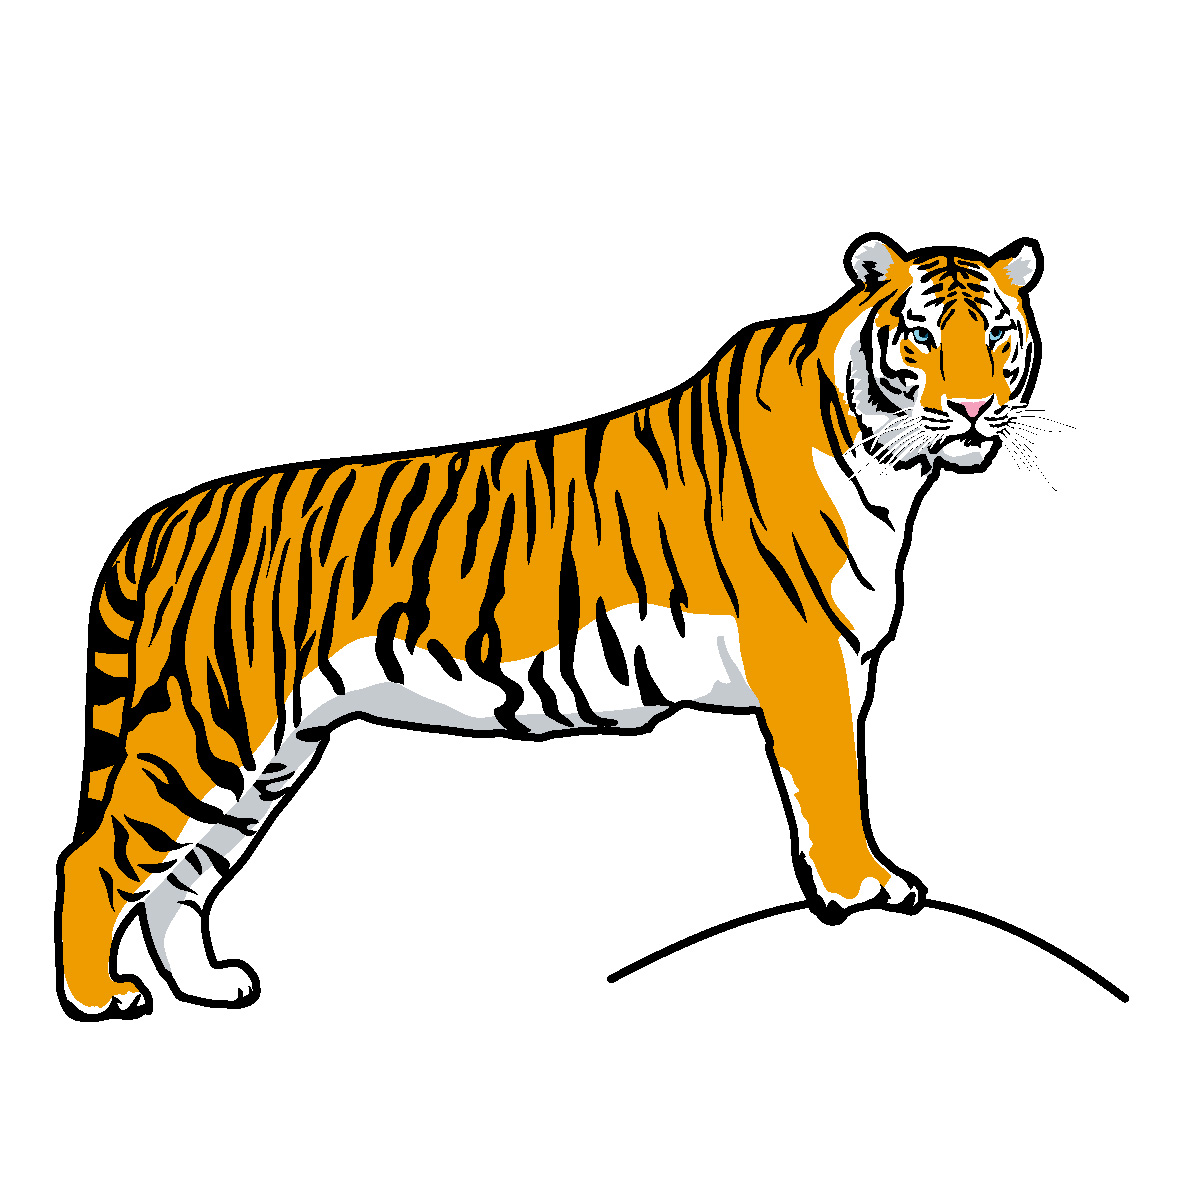 Tiger clip art free clipart images 2